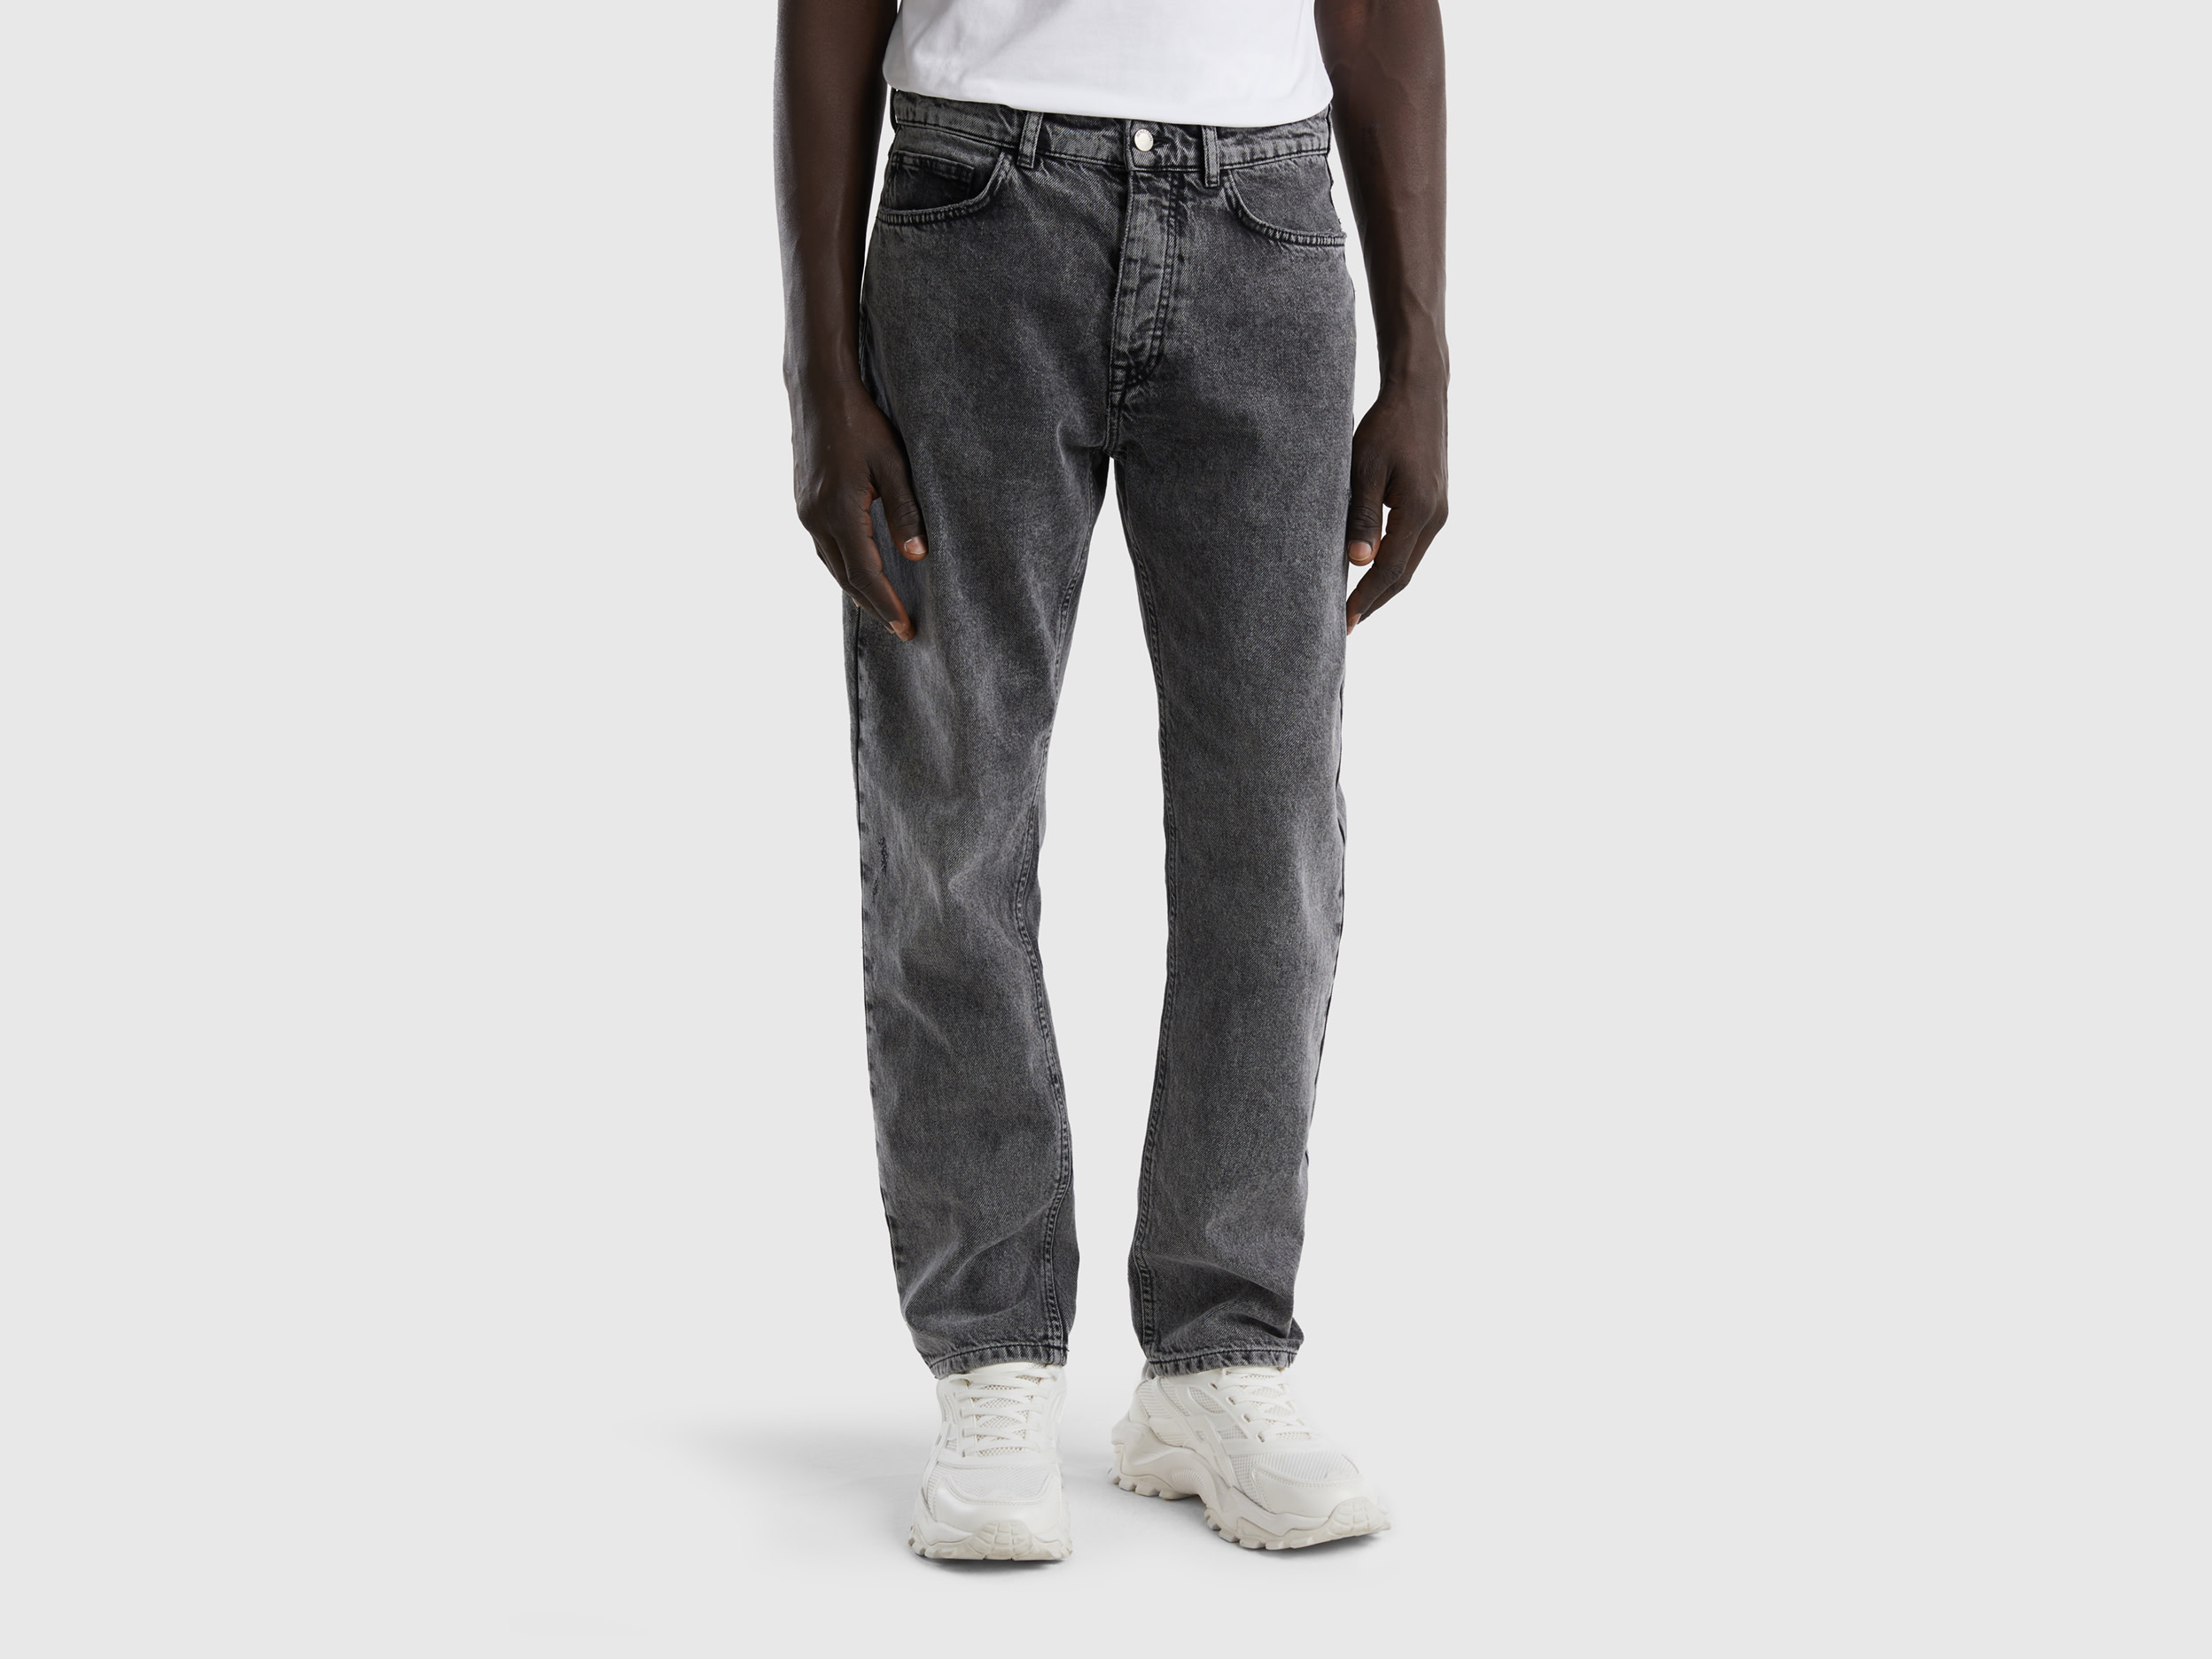 Benetton, Five-pocket Worn Look Jeans, size 32, Black, Men